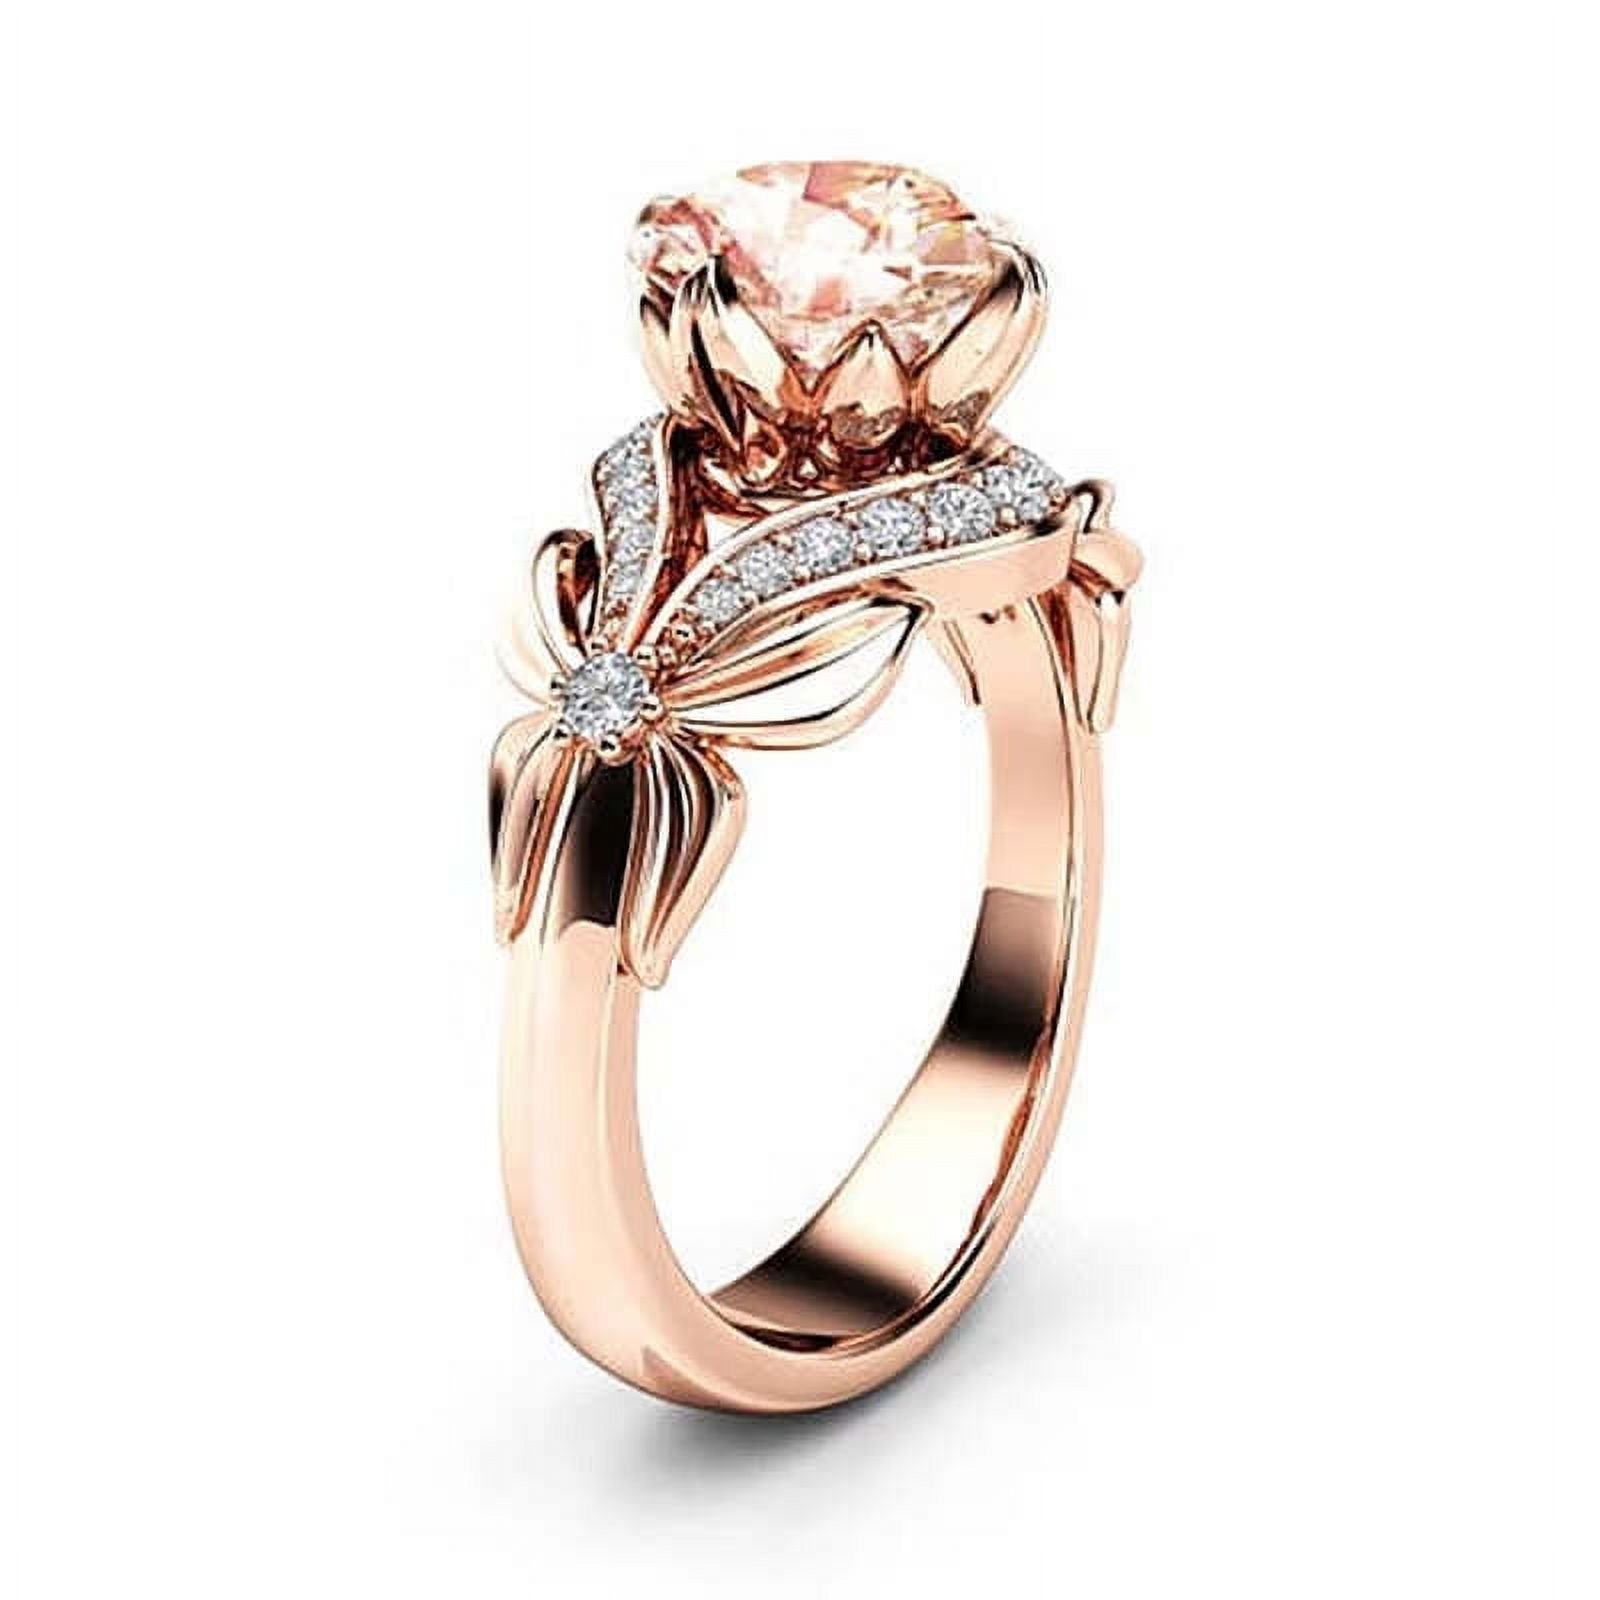 Designice Vintage Diamond 18K Rose Gold Ring Gemstone Ring for Women pure topaz Jewelry Gemstone - image 1 of 3